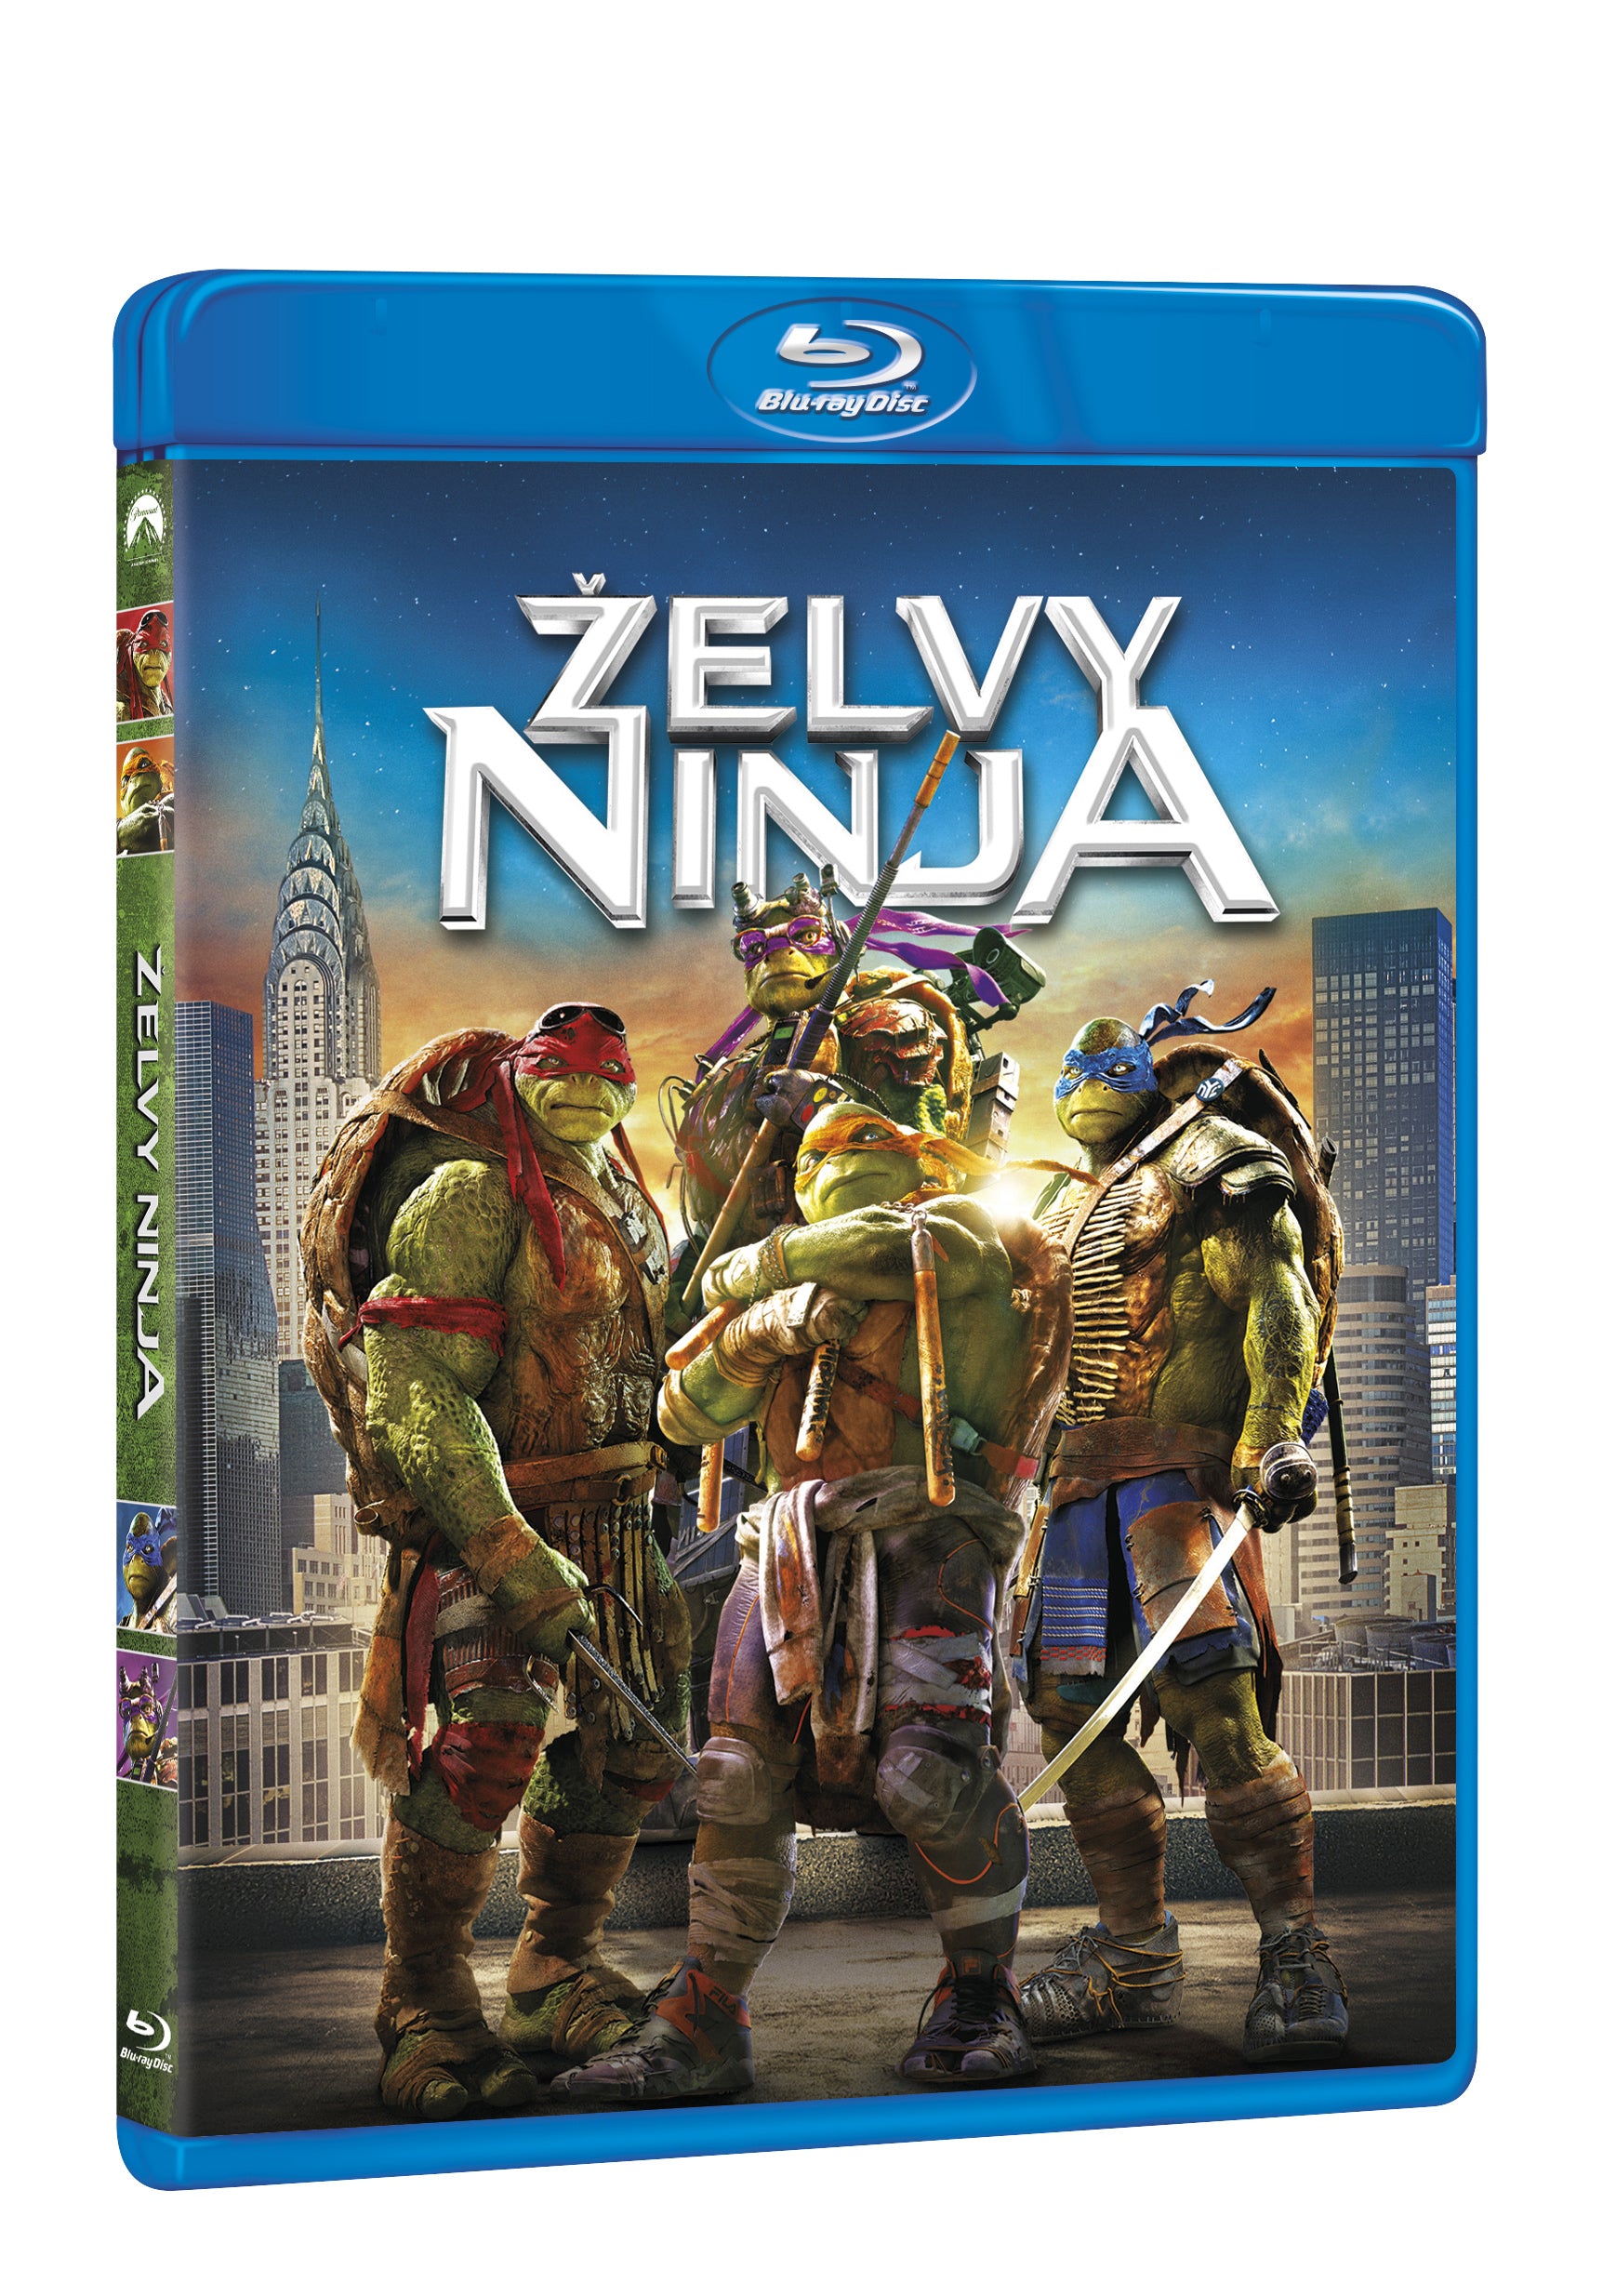 Zelvy Ninja BD / Teenage Mutant Ninja Turtles - Czech version